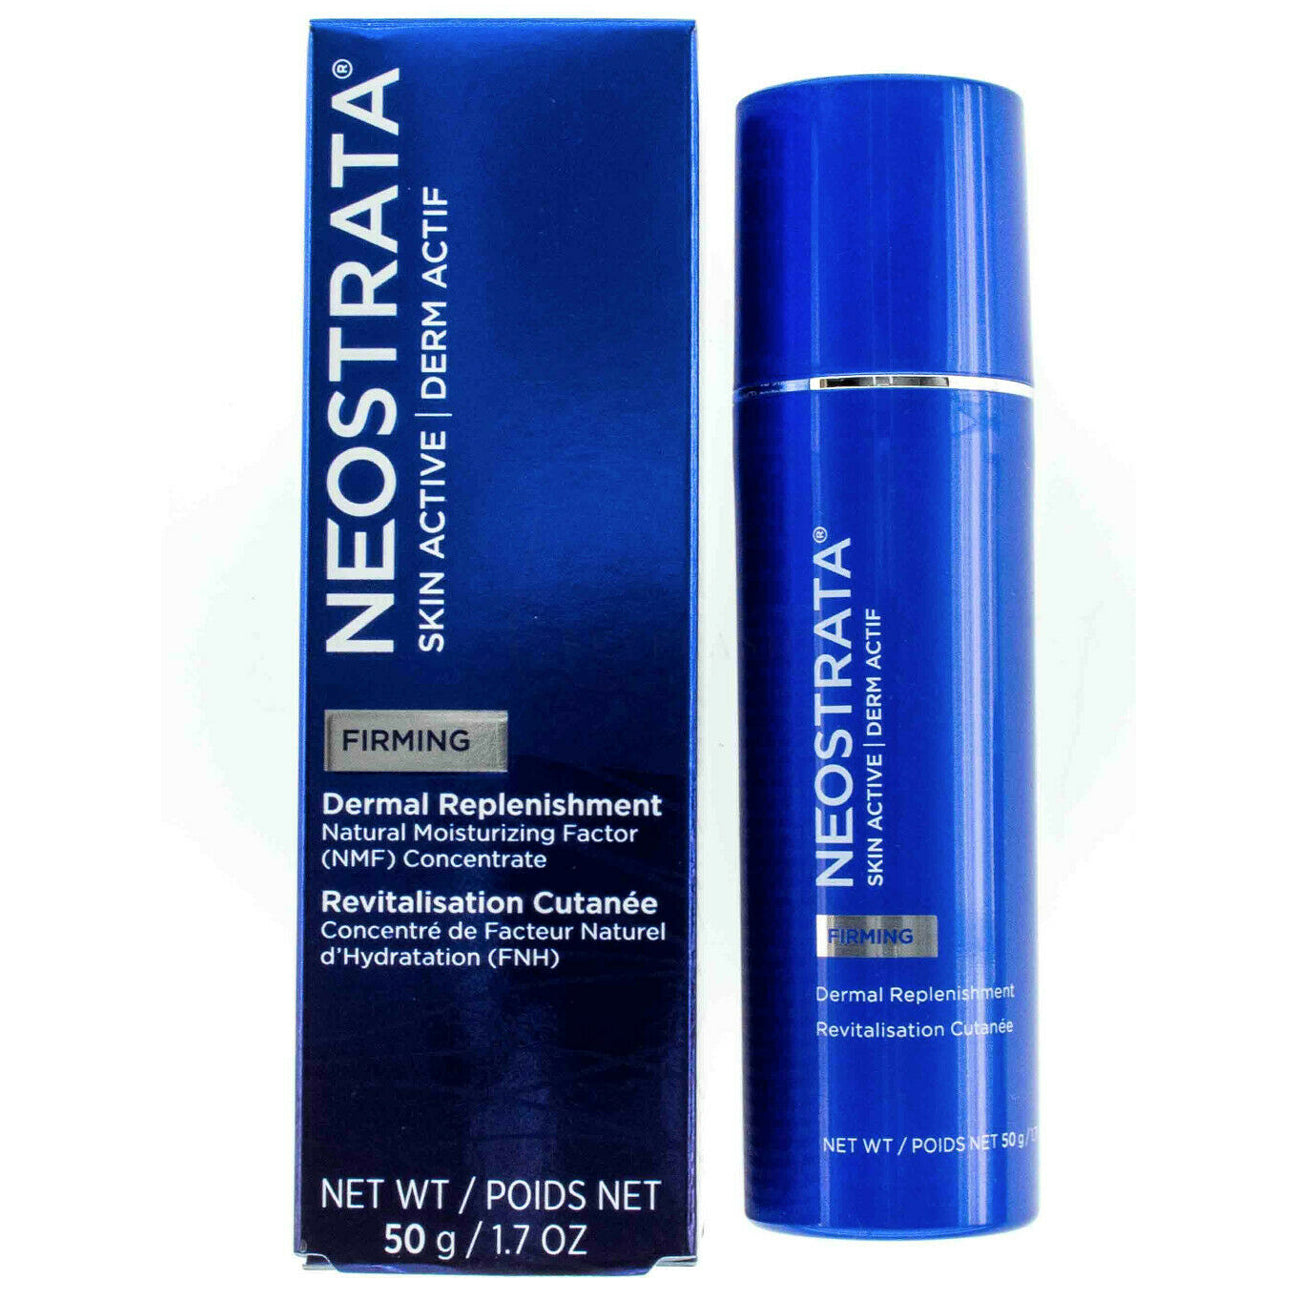 Neostrata Skin Active Firming Dermal Replenishment 1.7 oz